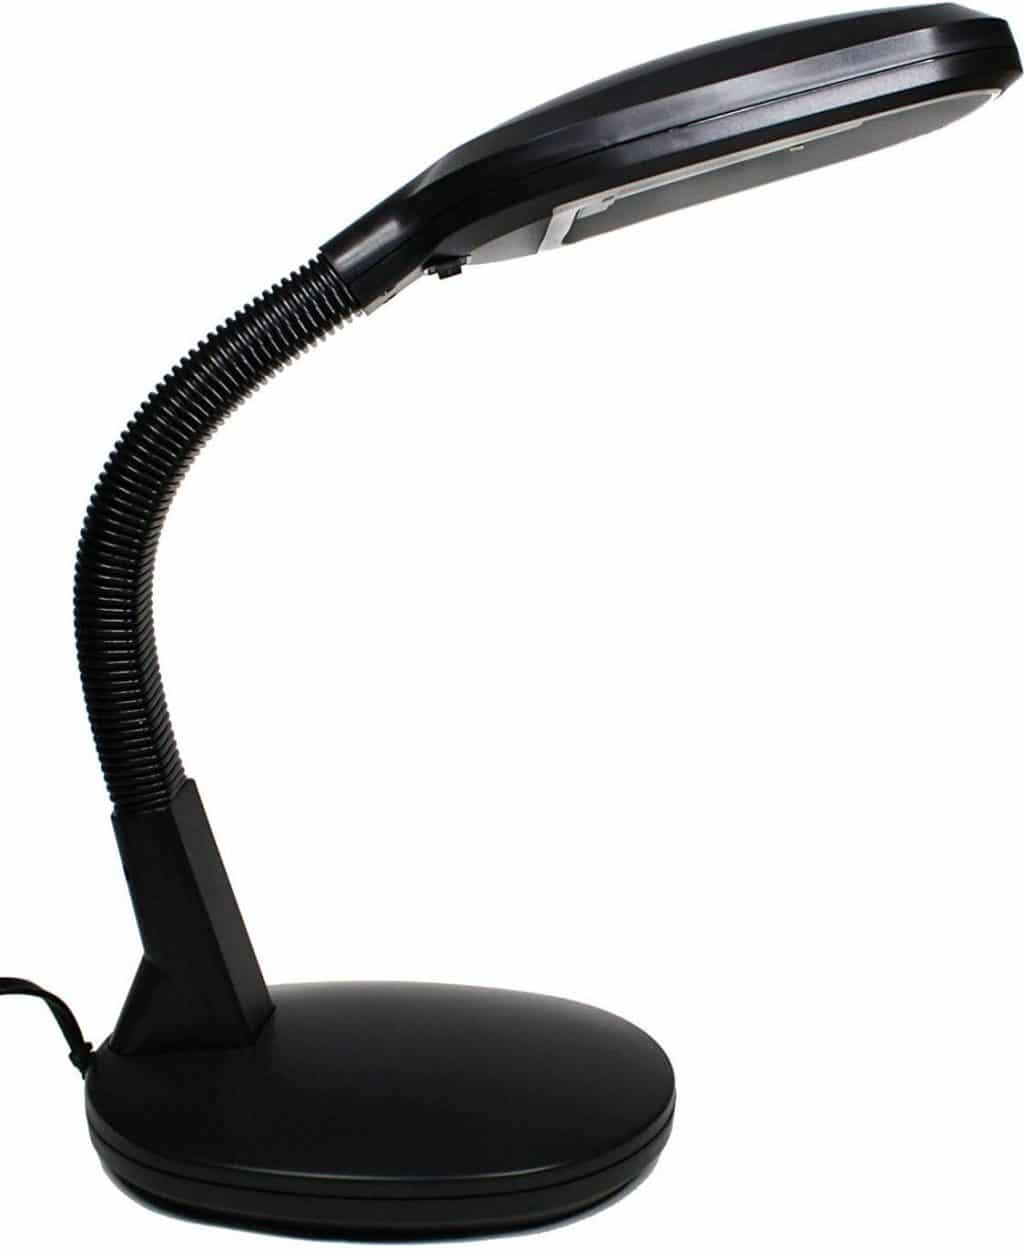 eHealthSource Sunlight Desk Lamp